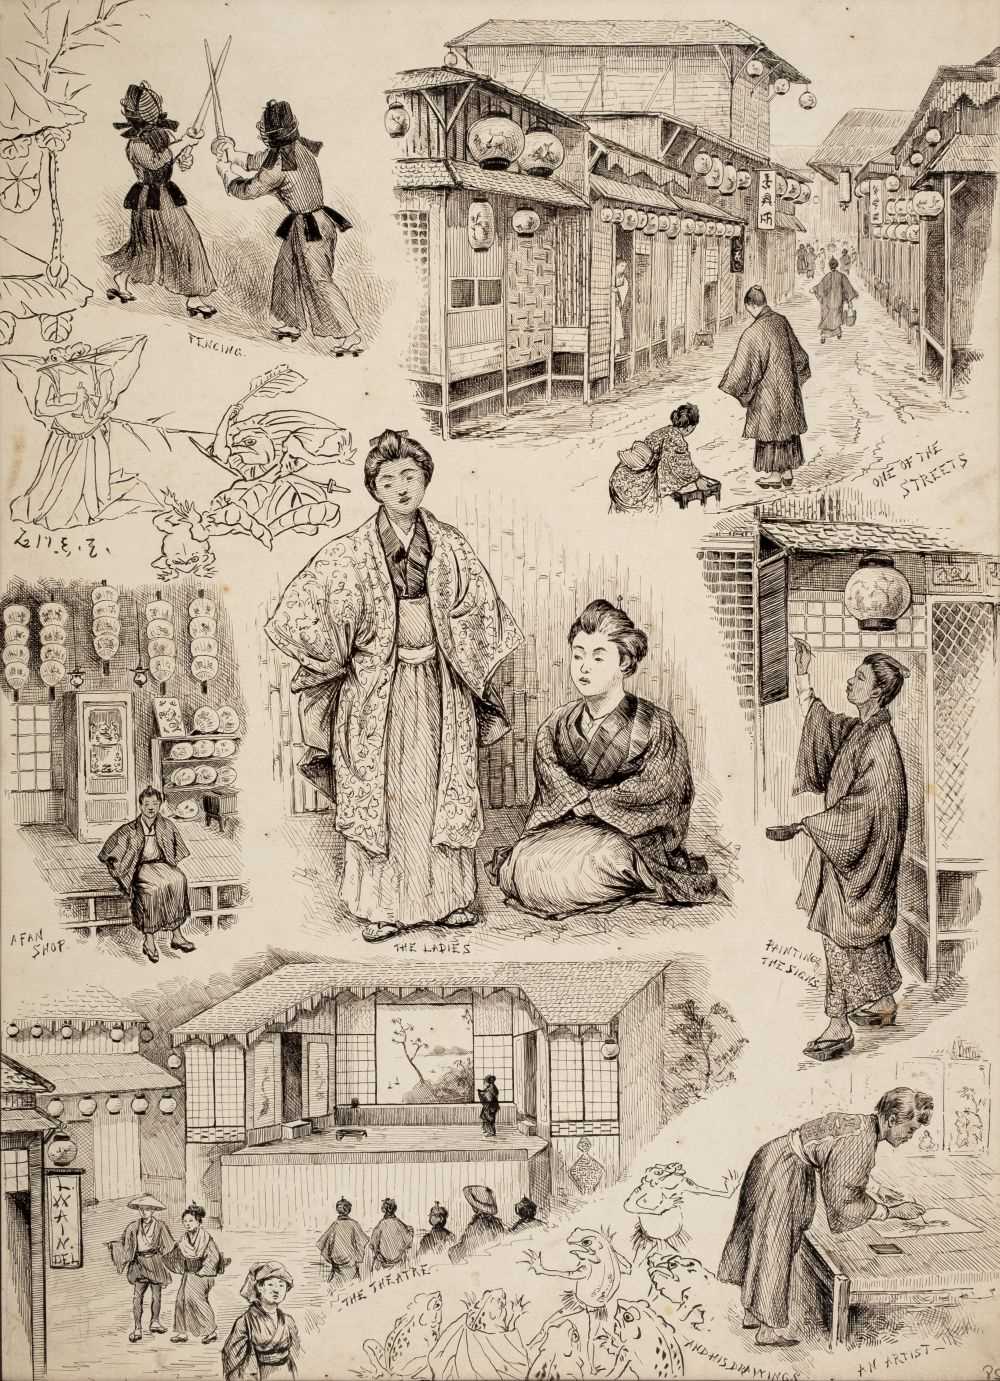 Lot 698 - Wain (Louis, 1860-1839). "The Japanese Village, Knightsbridge", 1885